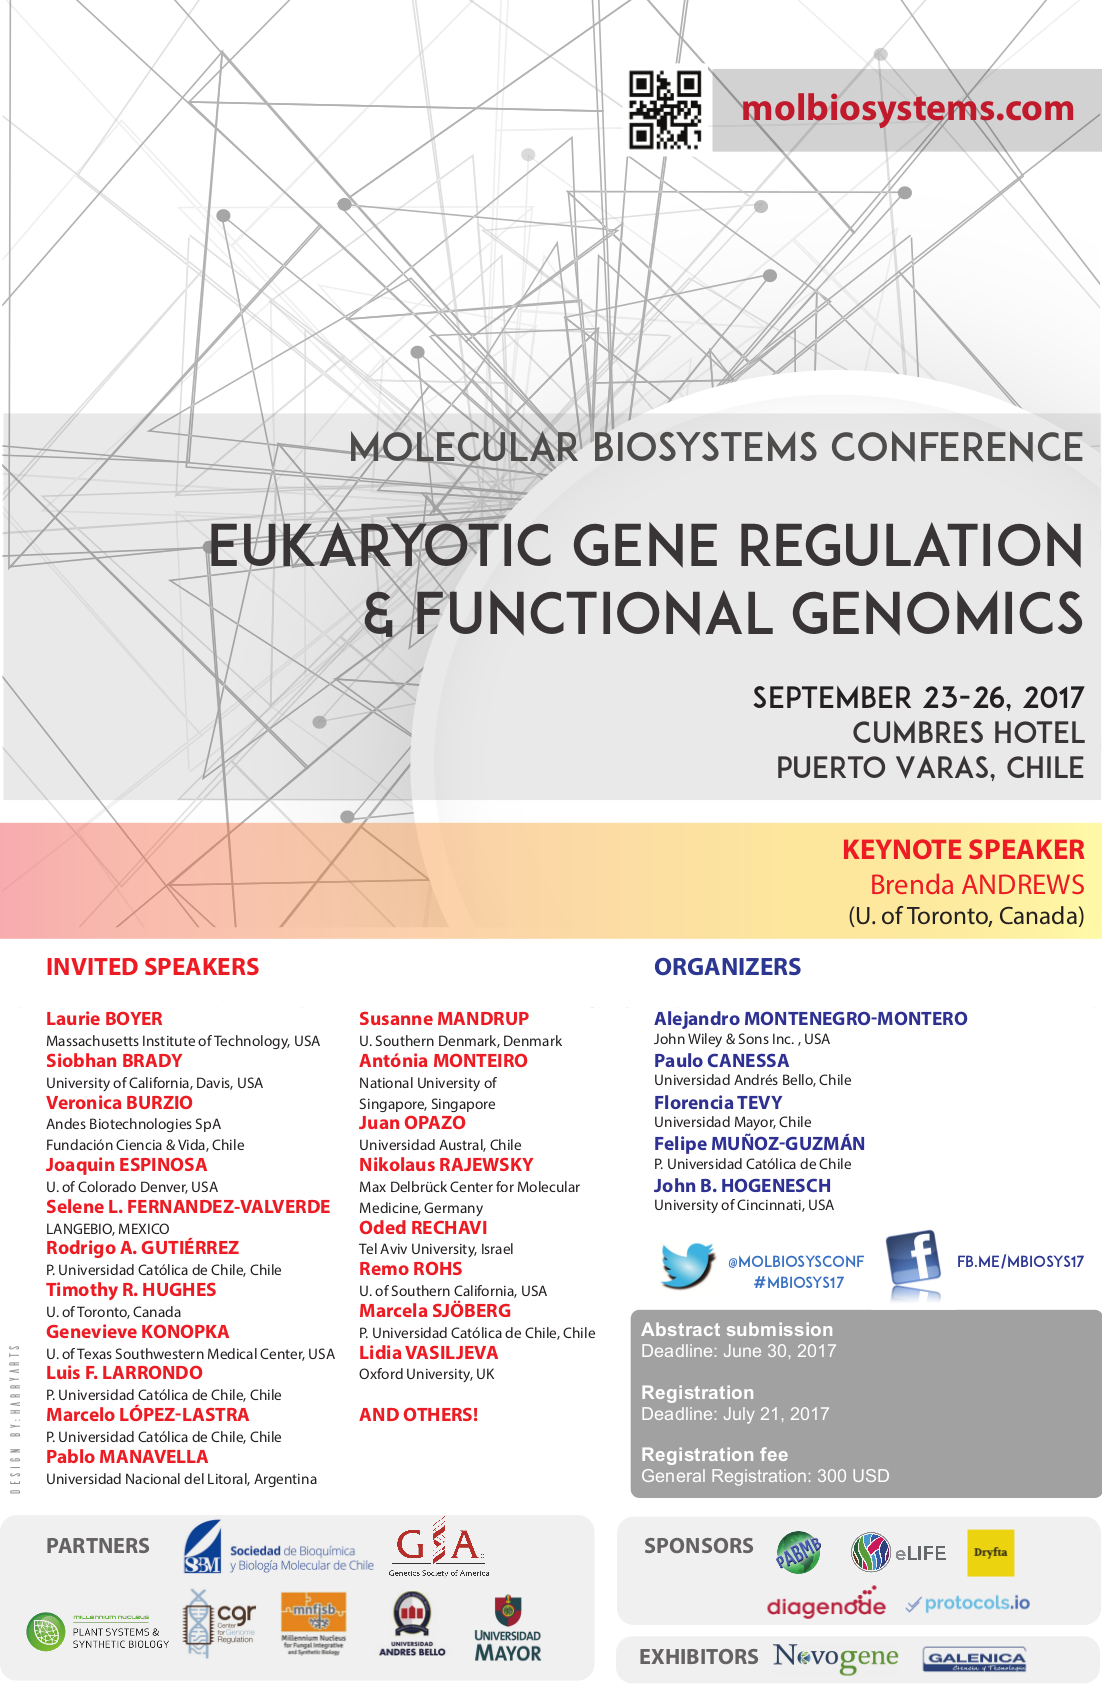 Molecular Biosystems Conference on Eukaryotic Gene Regulation and Functional Genomics